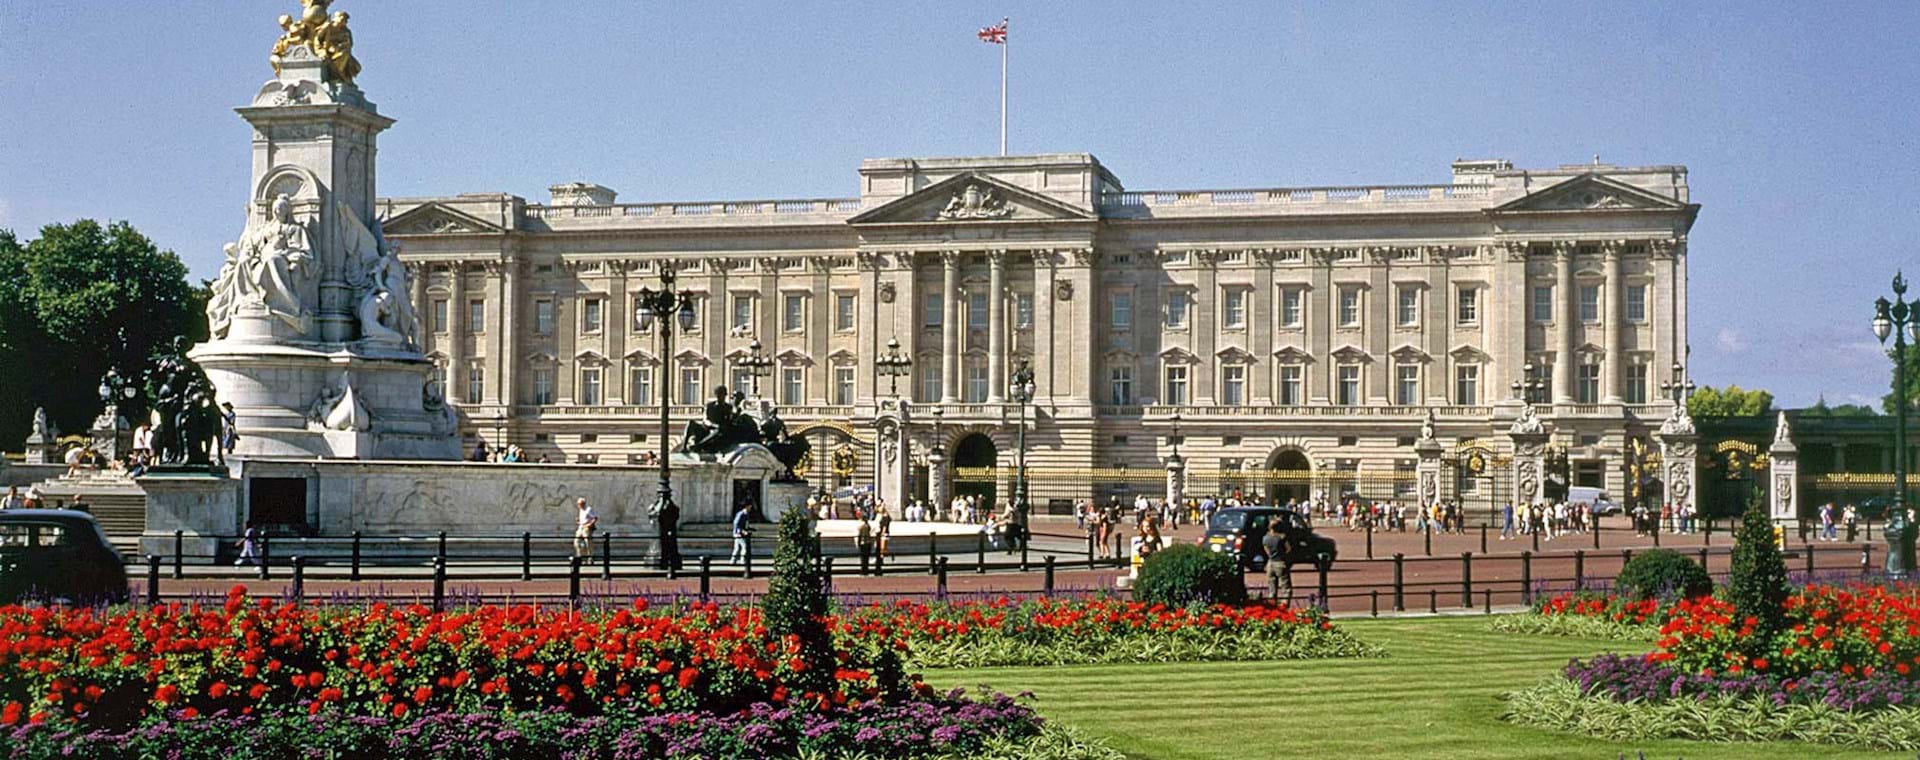 Buckingham Palace with Flowers